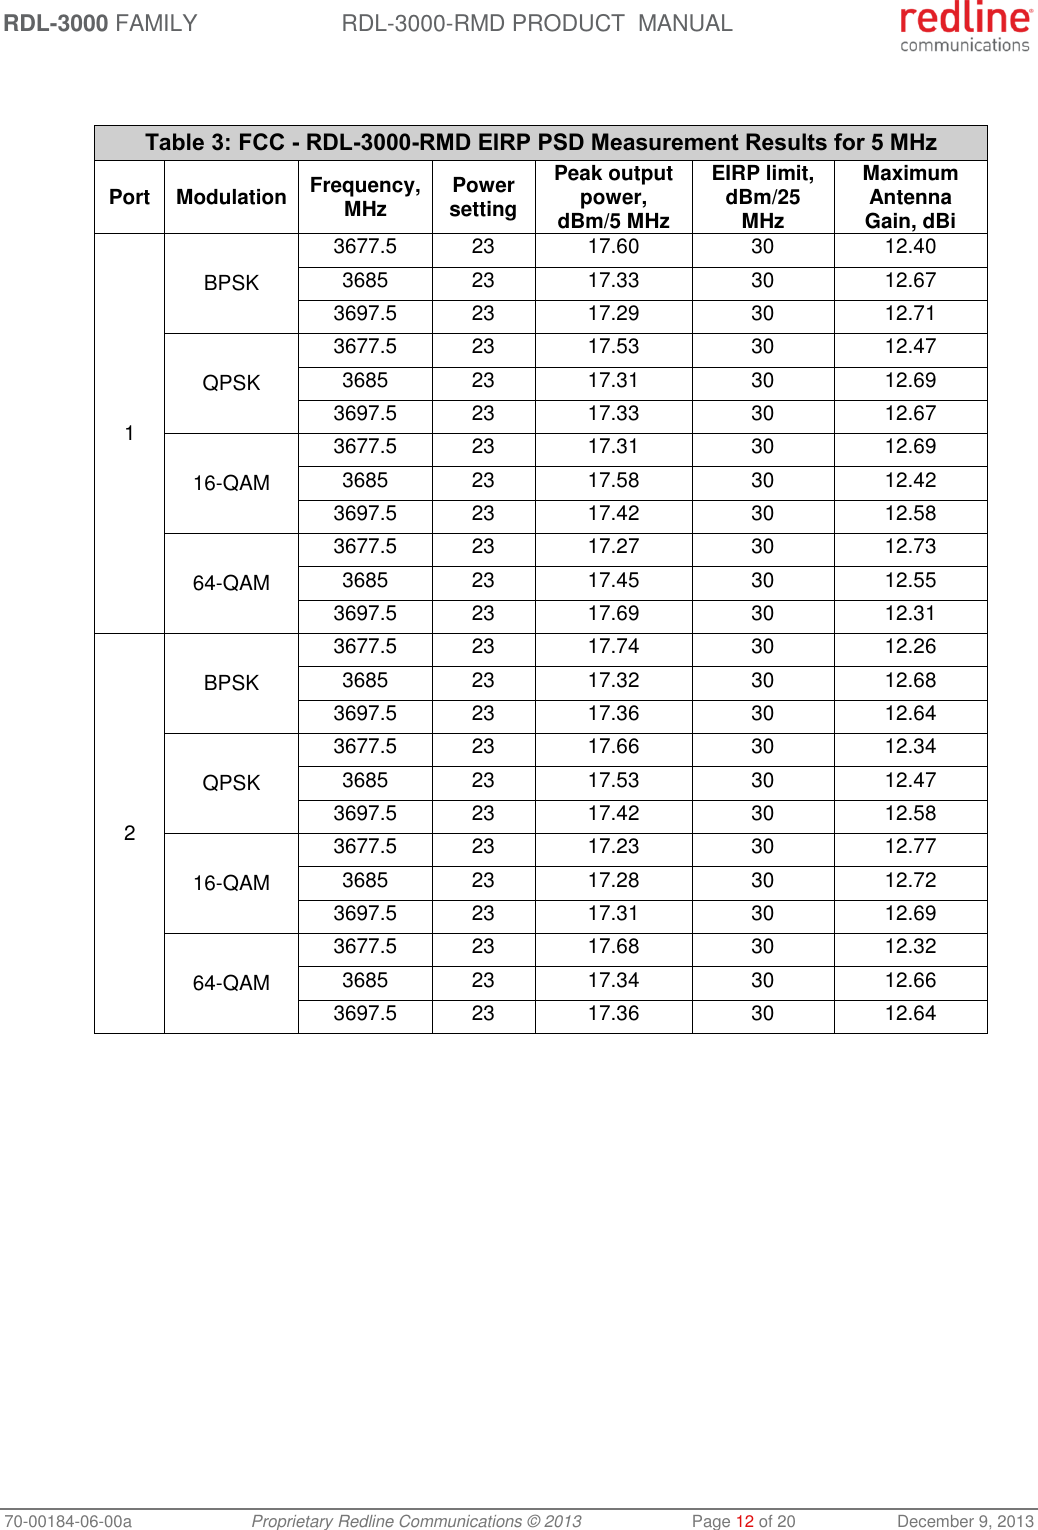 RDL-3000 FAMILY RDL-3000-RMD PRODUCT  MANUAL 70-00184-06-00a  Proprietary Redline Communications © 2013  Page 12 of 20  December 9, 2013   Table 3: FCC - RDL-3000-RMD EIRP PSD Measurement Results for 5 MHz Port Modulation Frequency, MHz Power setting Peak output power, dBm/5 MHz EIRP limit, dBm/25 MHz Maximum Antenna Gain, dBi 1 BPSK 3677.5 23 17.60 30 12.40 3685 23 17.33 30 12.67 3697.5 23 17.29 30 12.71 QPSK 3677.5 23 17.53 30 12.47 3685 23 17.31 30 12.69 3697.5 23 17.33 30 12.67 16-QAM 3677.5 23 17.31 30 12.69 3685 23 17.58 30 12.42 3697.5 23 17.42 30 12.58 64-QAM 3677.5 23 17.27 30 12.73 3685 23 17.45 30 12.55 3697.5 23 17.69 30 12.31 2 BPSK 3677.5 23 17.74 30 12.26 3685 23 17.32 30 12.68 3697.5 23 17.36 30 12.64 QPSK 3677.5 23 17.66 30 12.34 3685 23 17.53 30 12.47 3697.5 23 17.42 30 12.58 16-QAM 3677.5 23 17.23 30 12.77 3685 23 17.28 30 12.72 3697.5 23 17.31 30 12.69 64-QAM 3677.5 23 17.68 30 12.32 3685 23 17.34 30 12.66 3697.5 23 17.36 30 12.64  